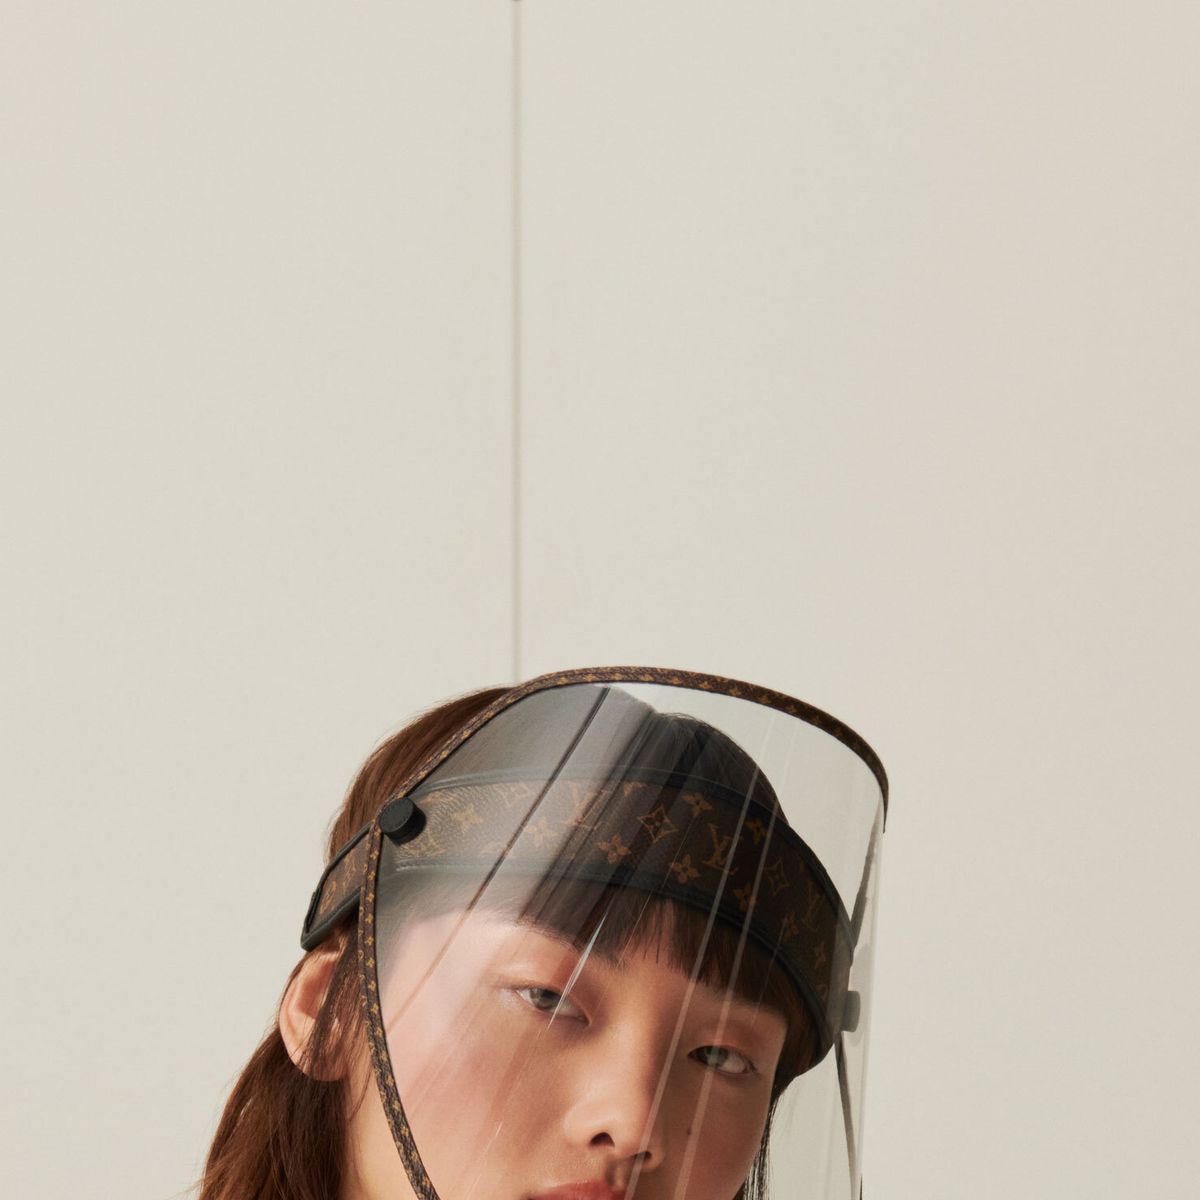 Louis Vuitton Will Release Designer COVID-19 Face Shields